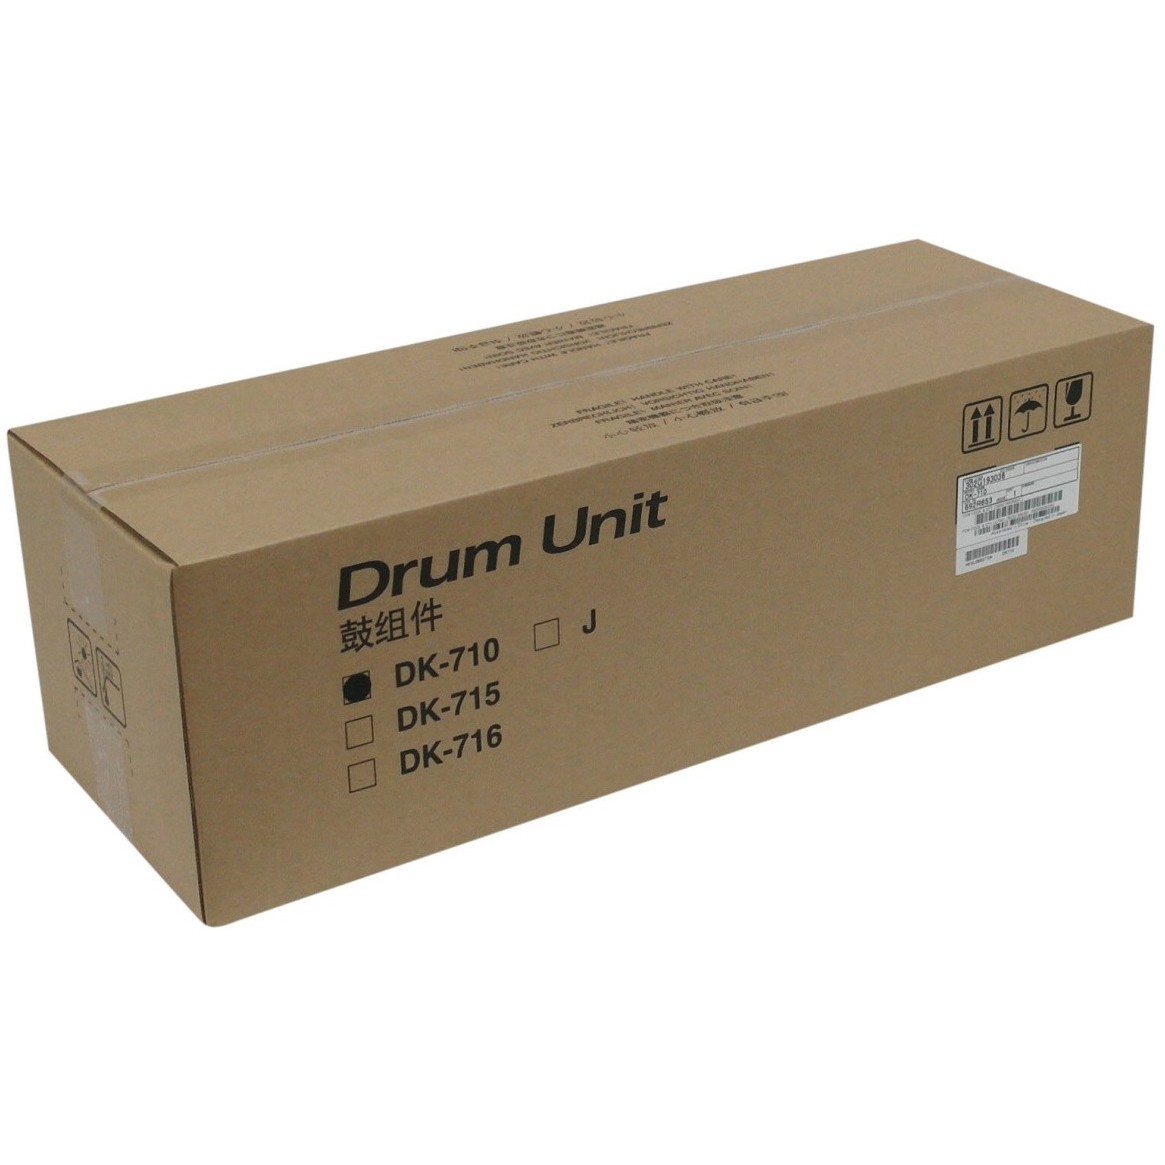 Original Kyocera DK-710 Drum Unit (302G193037)